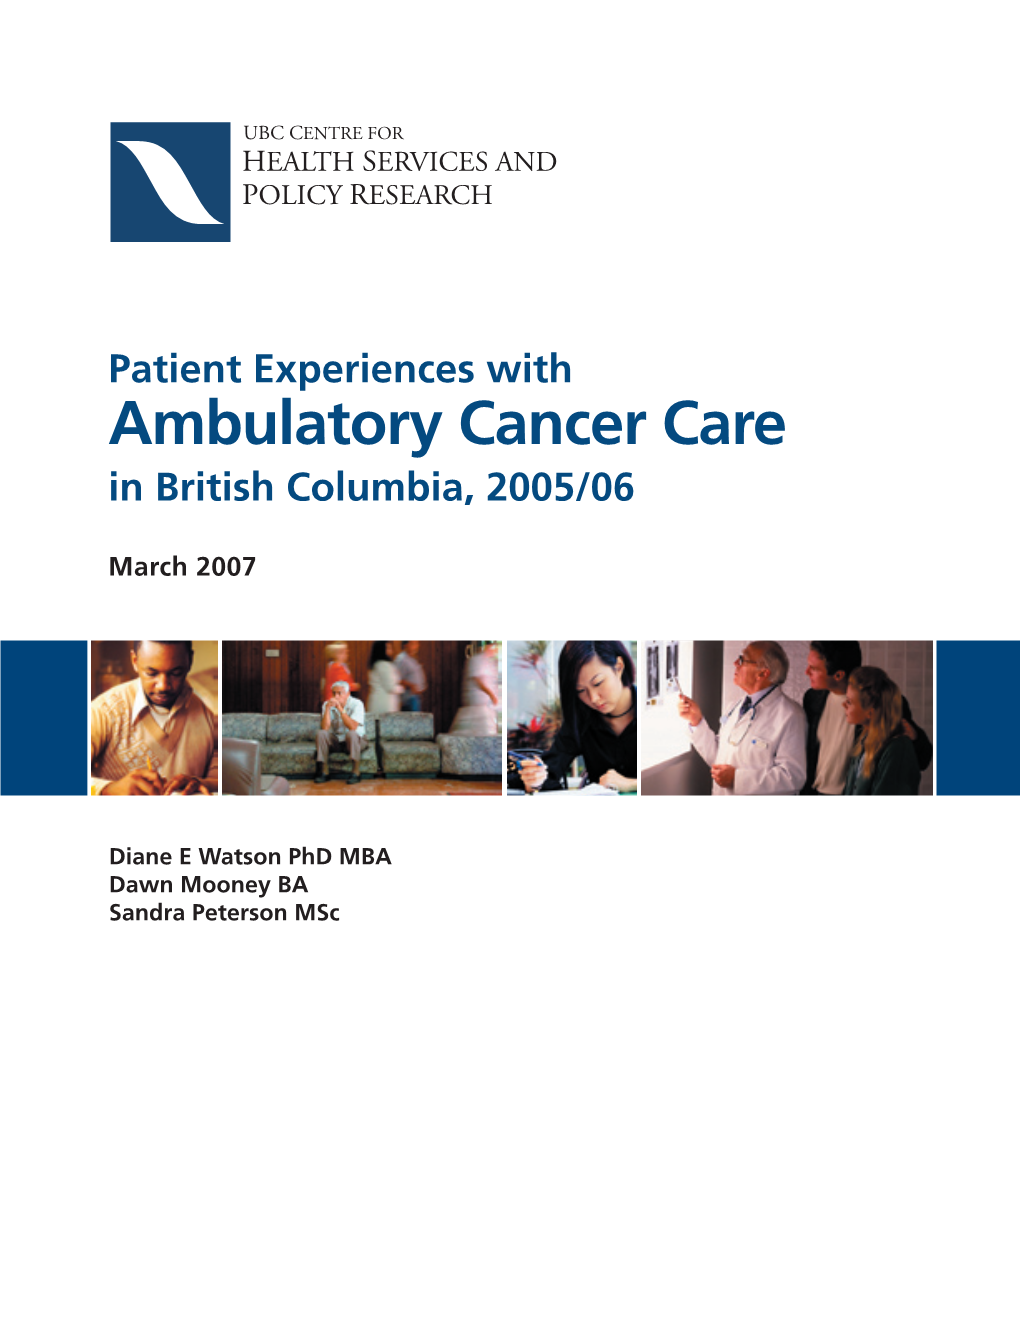 Ambulatory Cancer Care in British Columbia, 2005/06